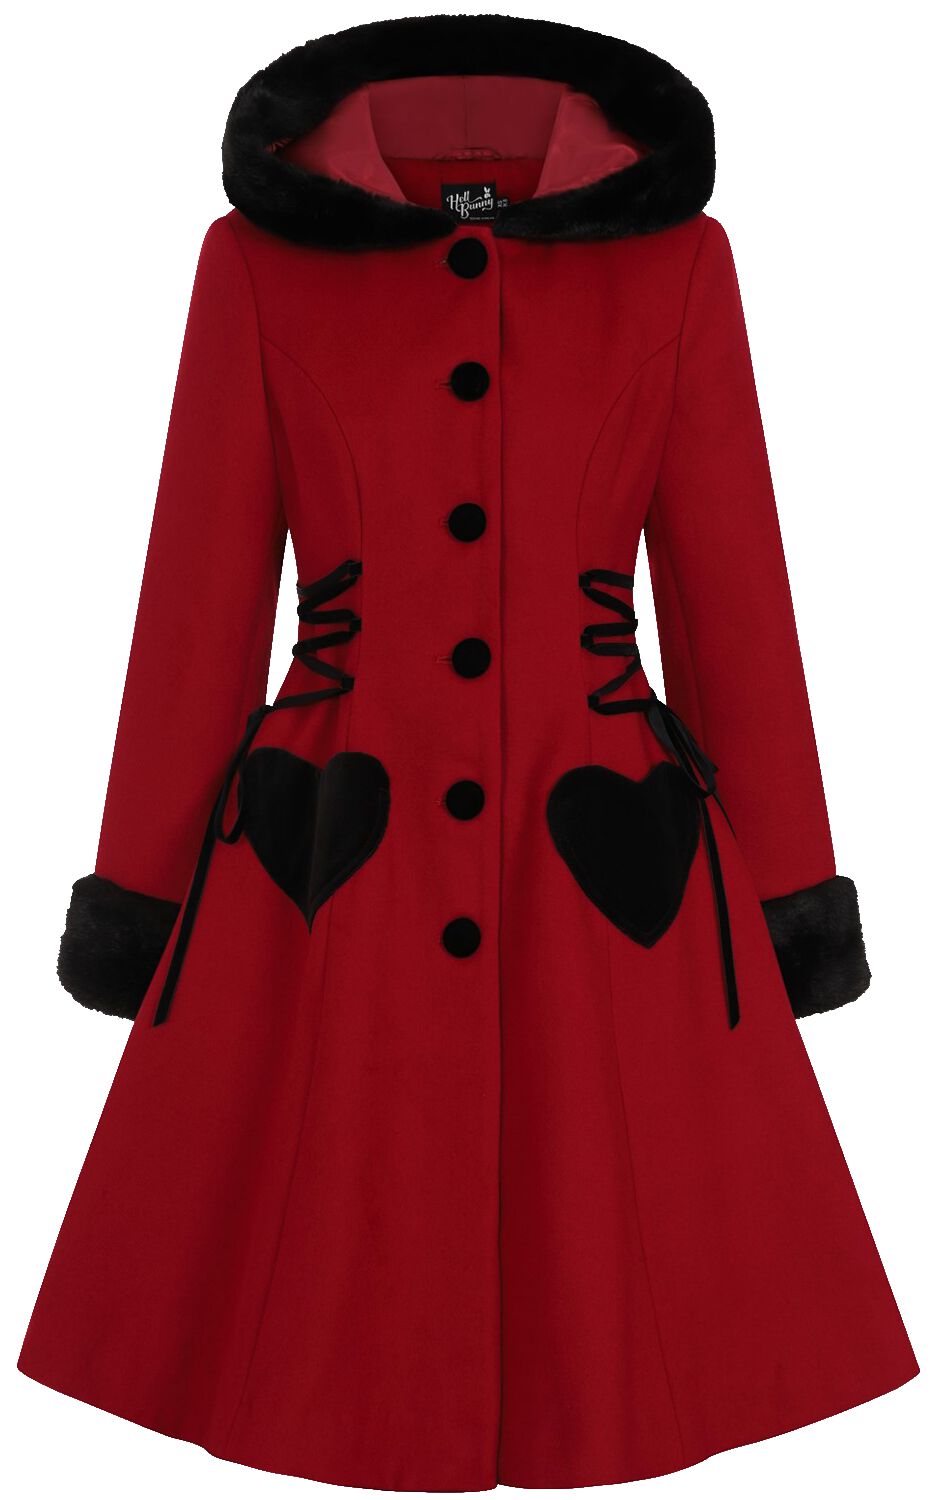 Hell Bunny Scarlett Coat Mantel rot schwarz